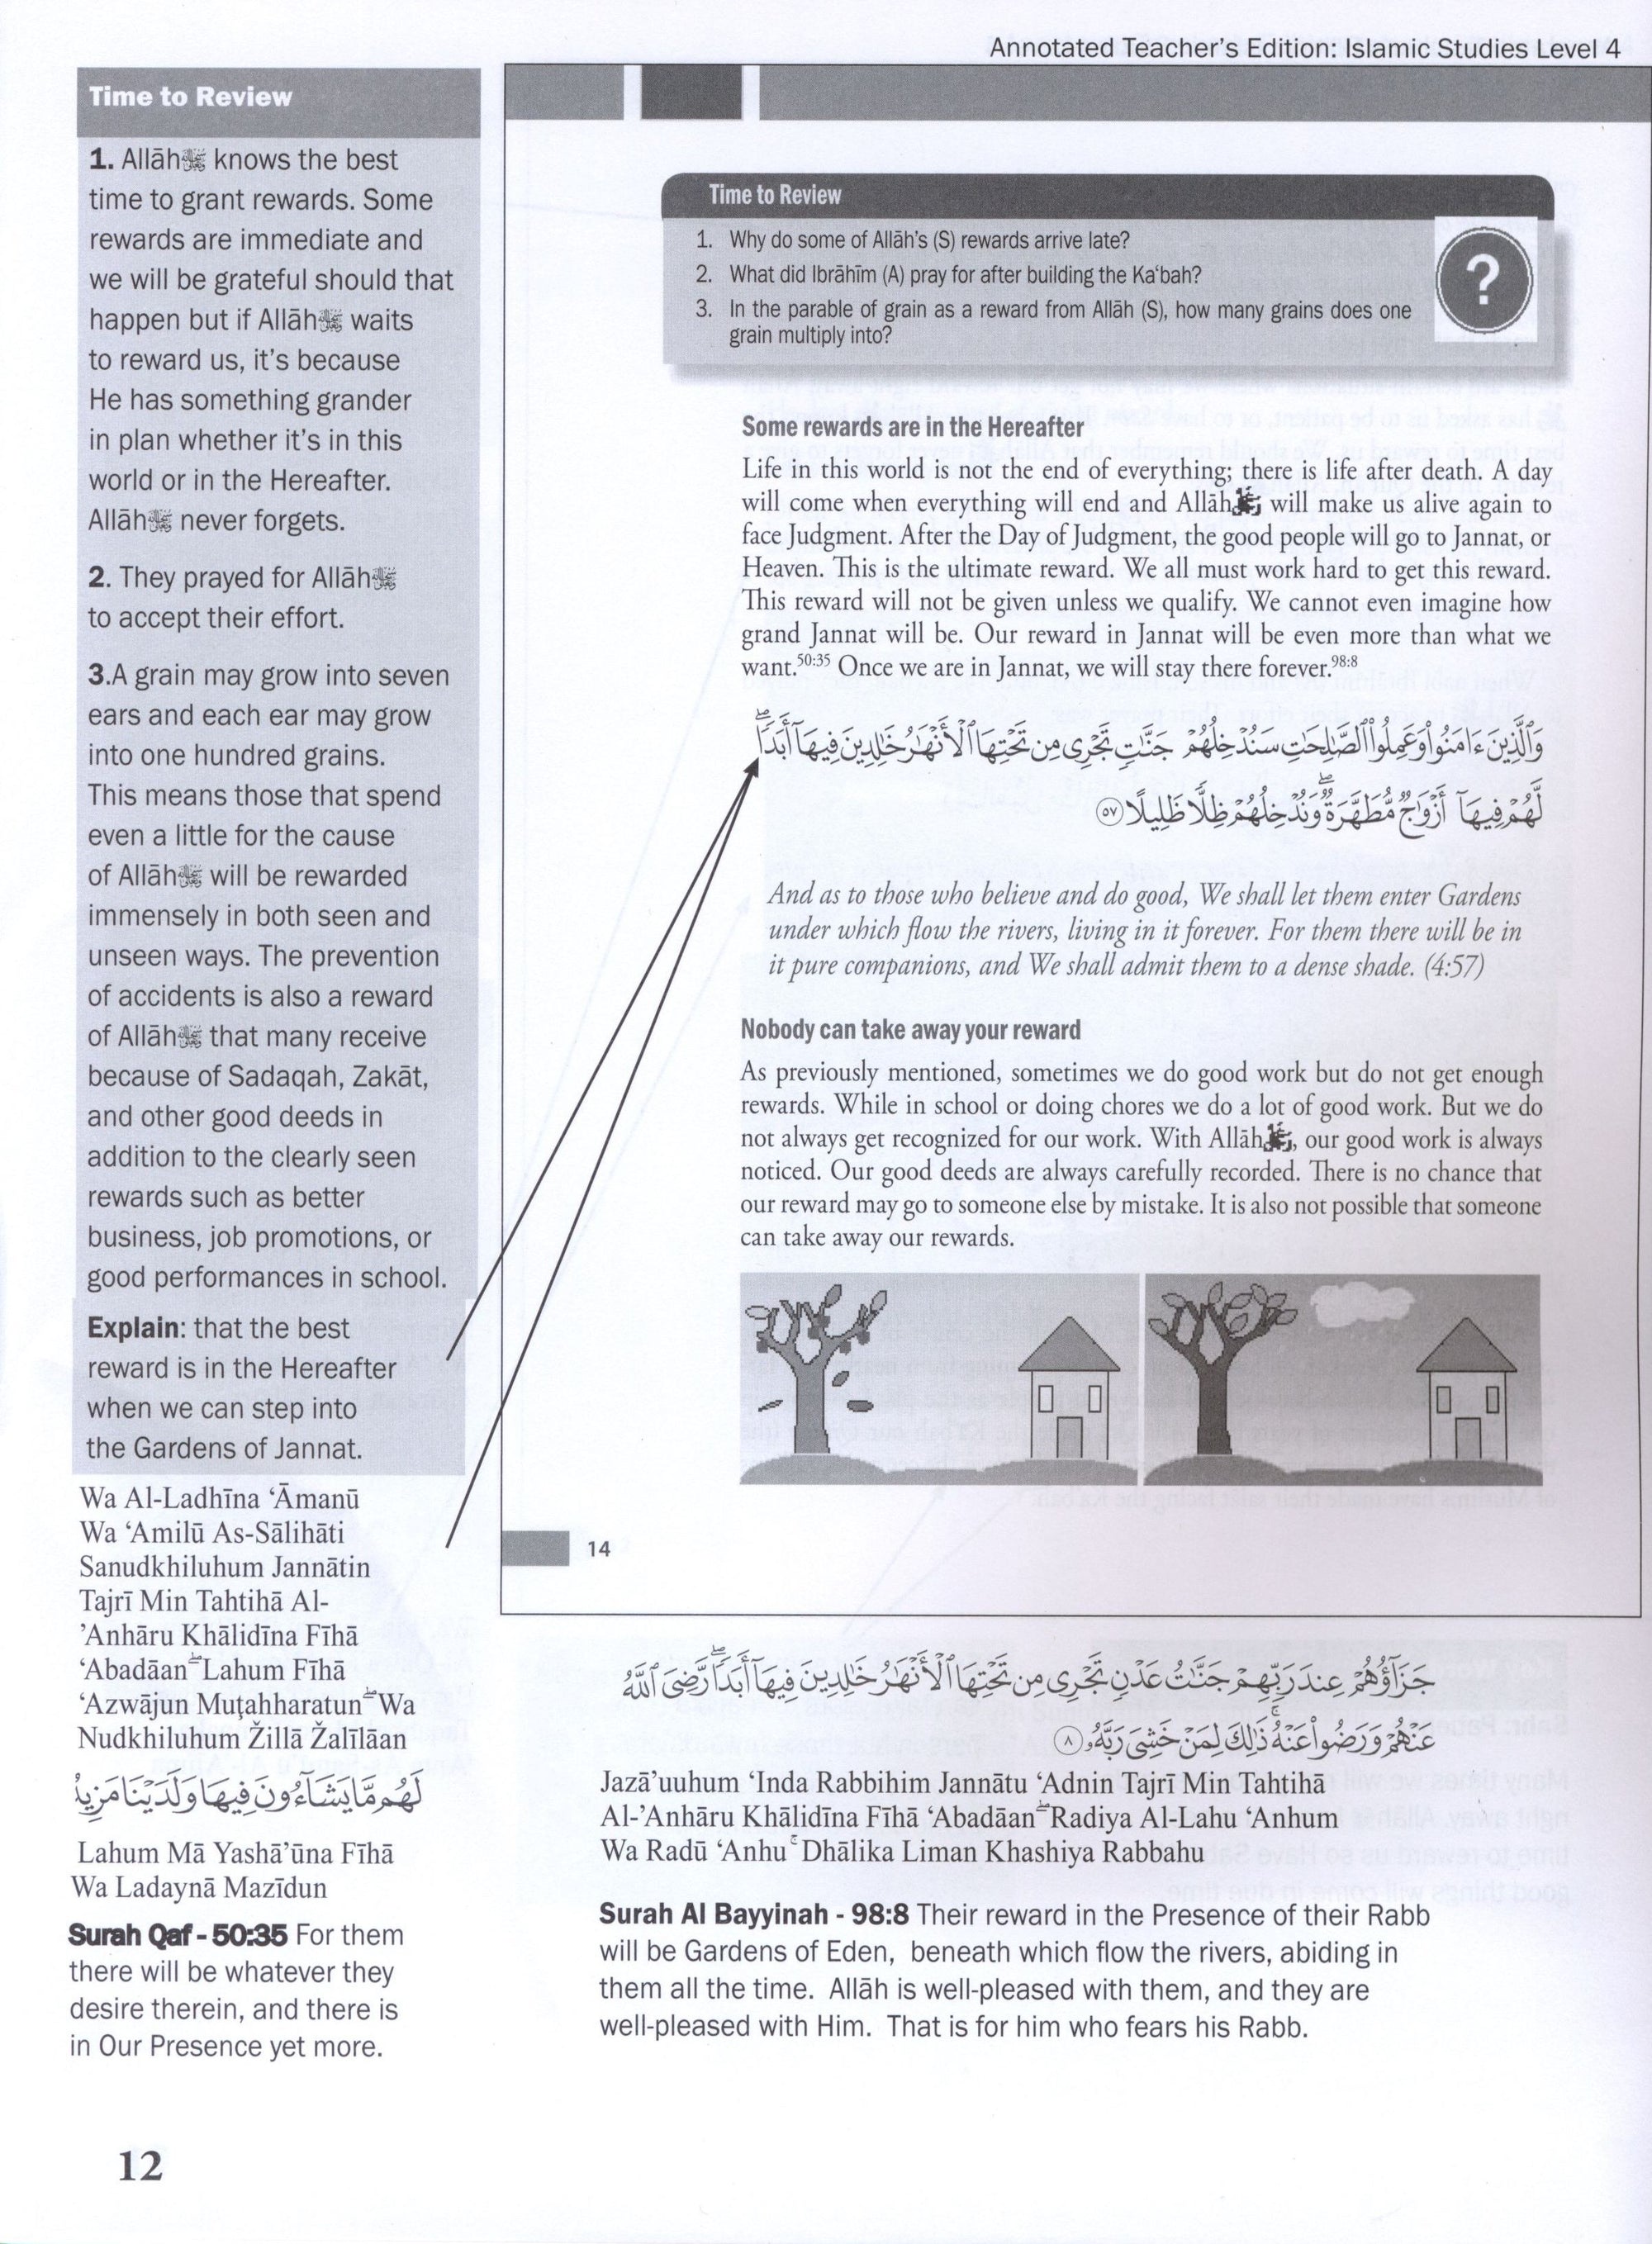 Weekend Learning Islamic Studies Teacher Manual Level 4